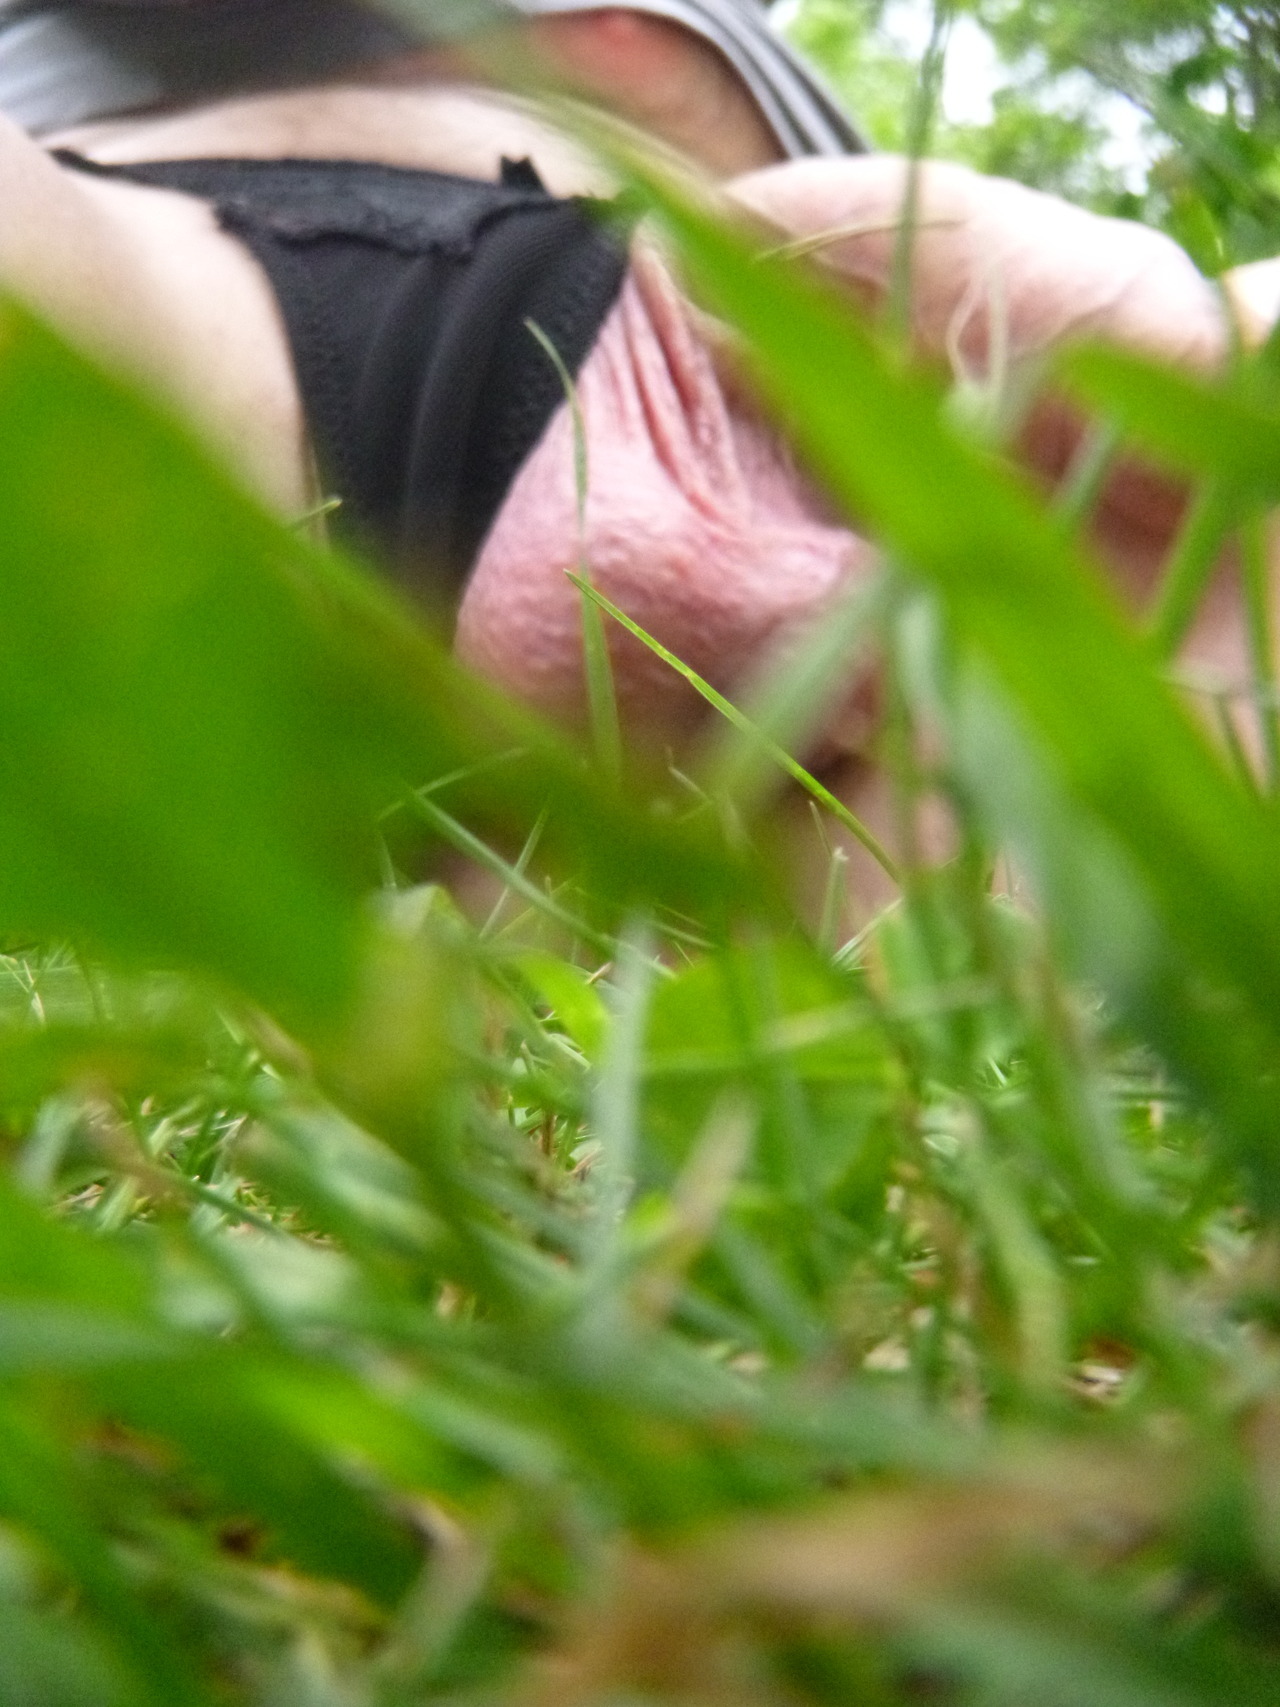 Me having fun in the grass&hellip;.